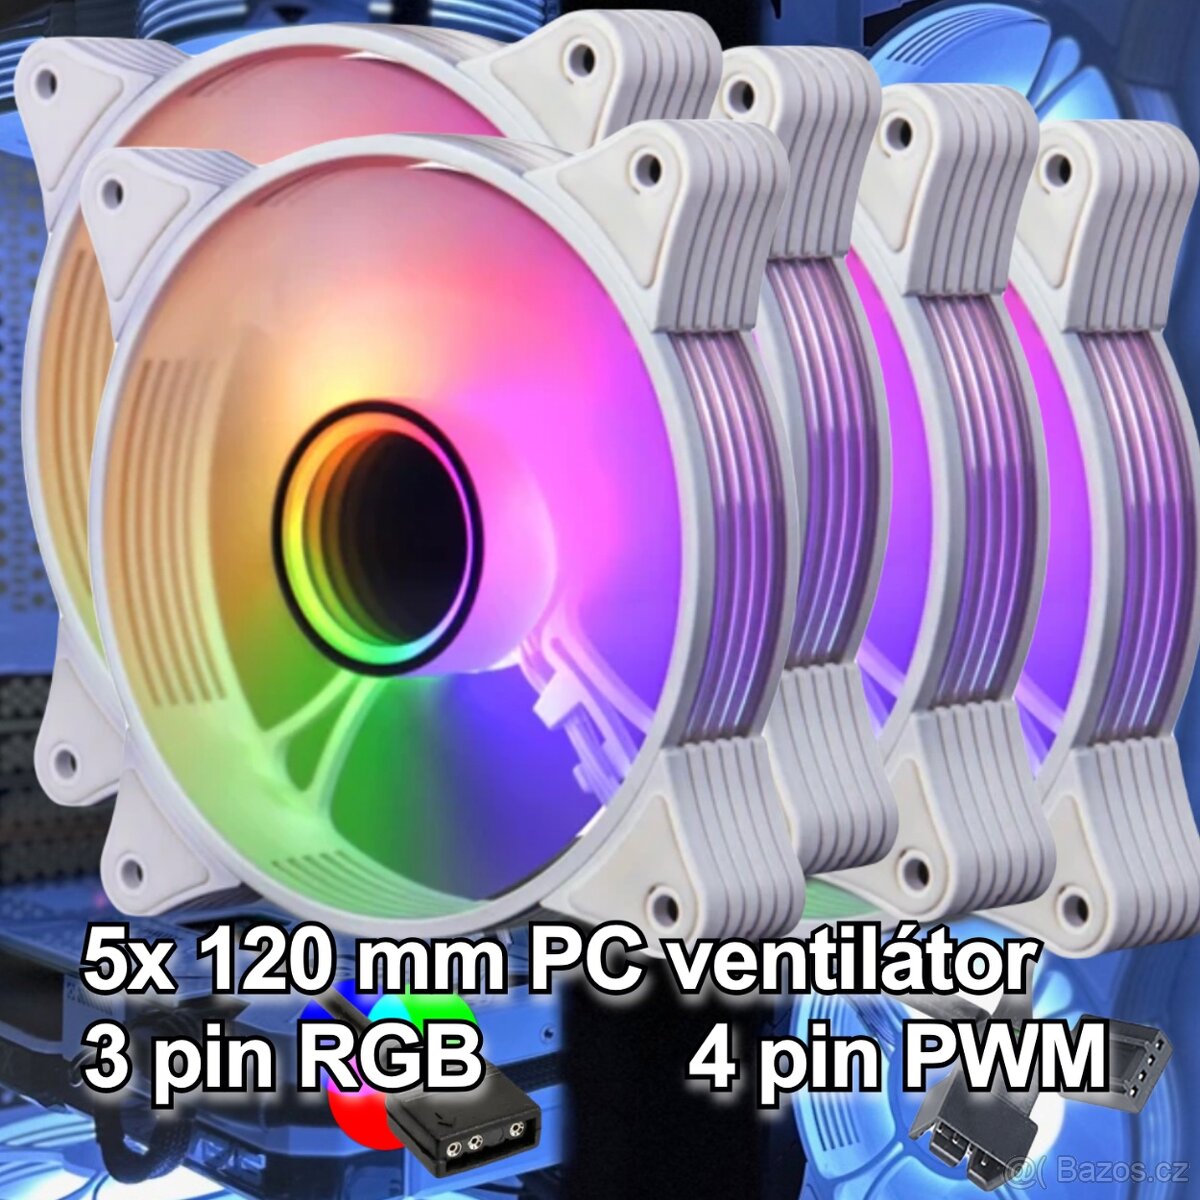 Bílé RGB PC větráčky ventilátory 120mm 5V 3 pin aRGB, PWM(5x